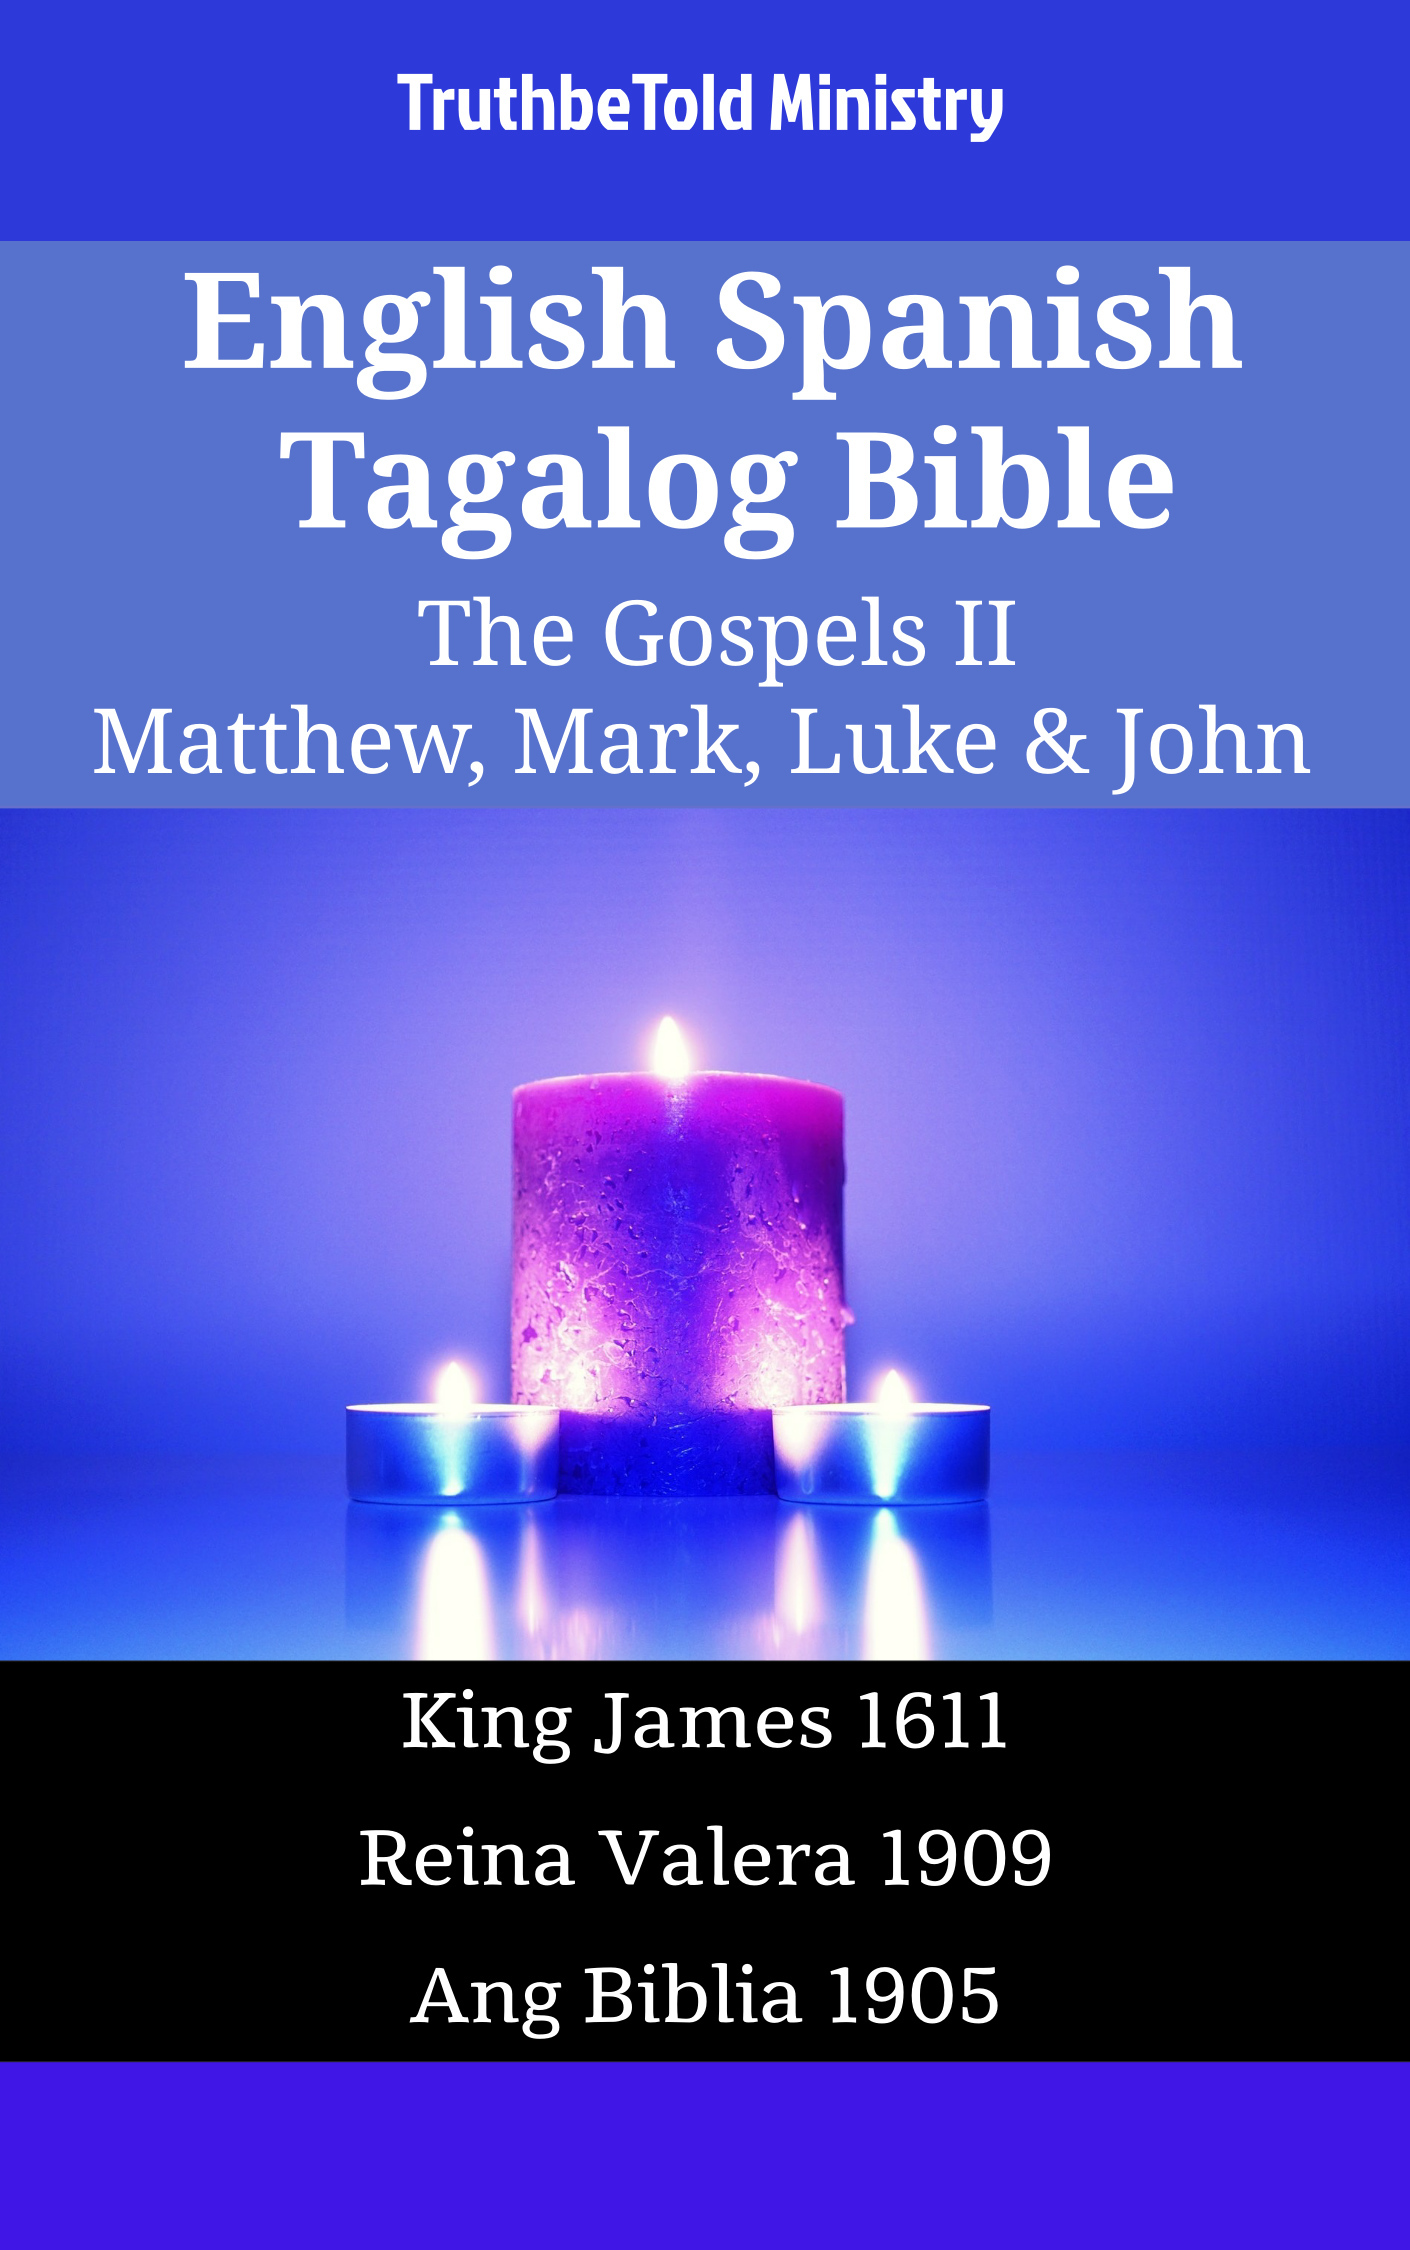 English Spanish Tagalog Bible - The Gospels II - Matthew, Mark, Luke & John